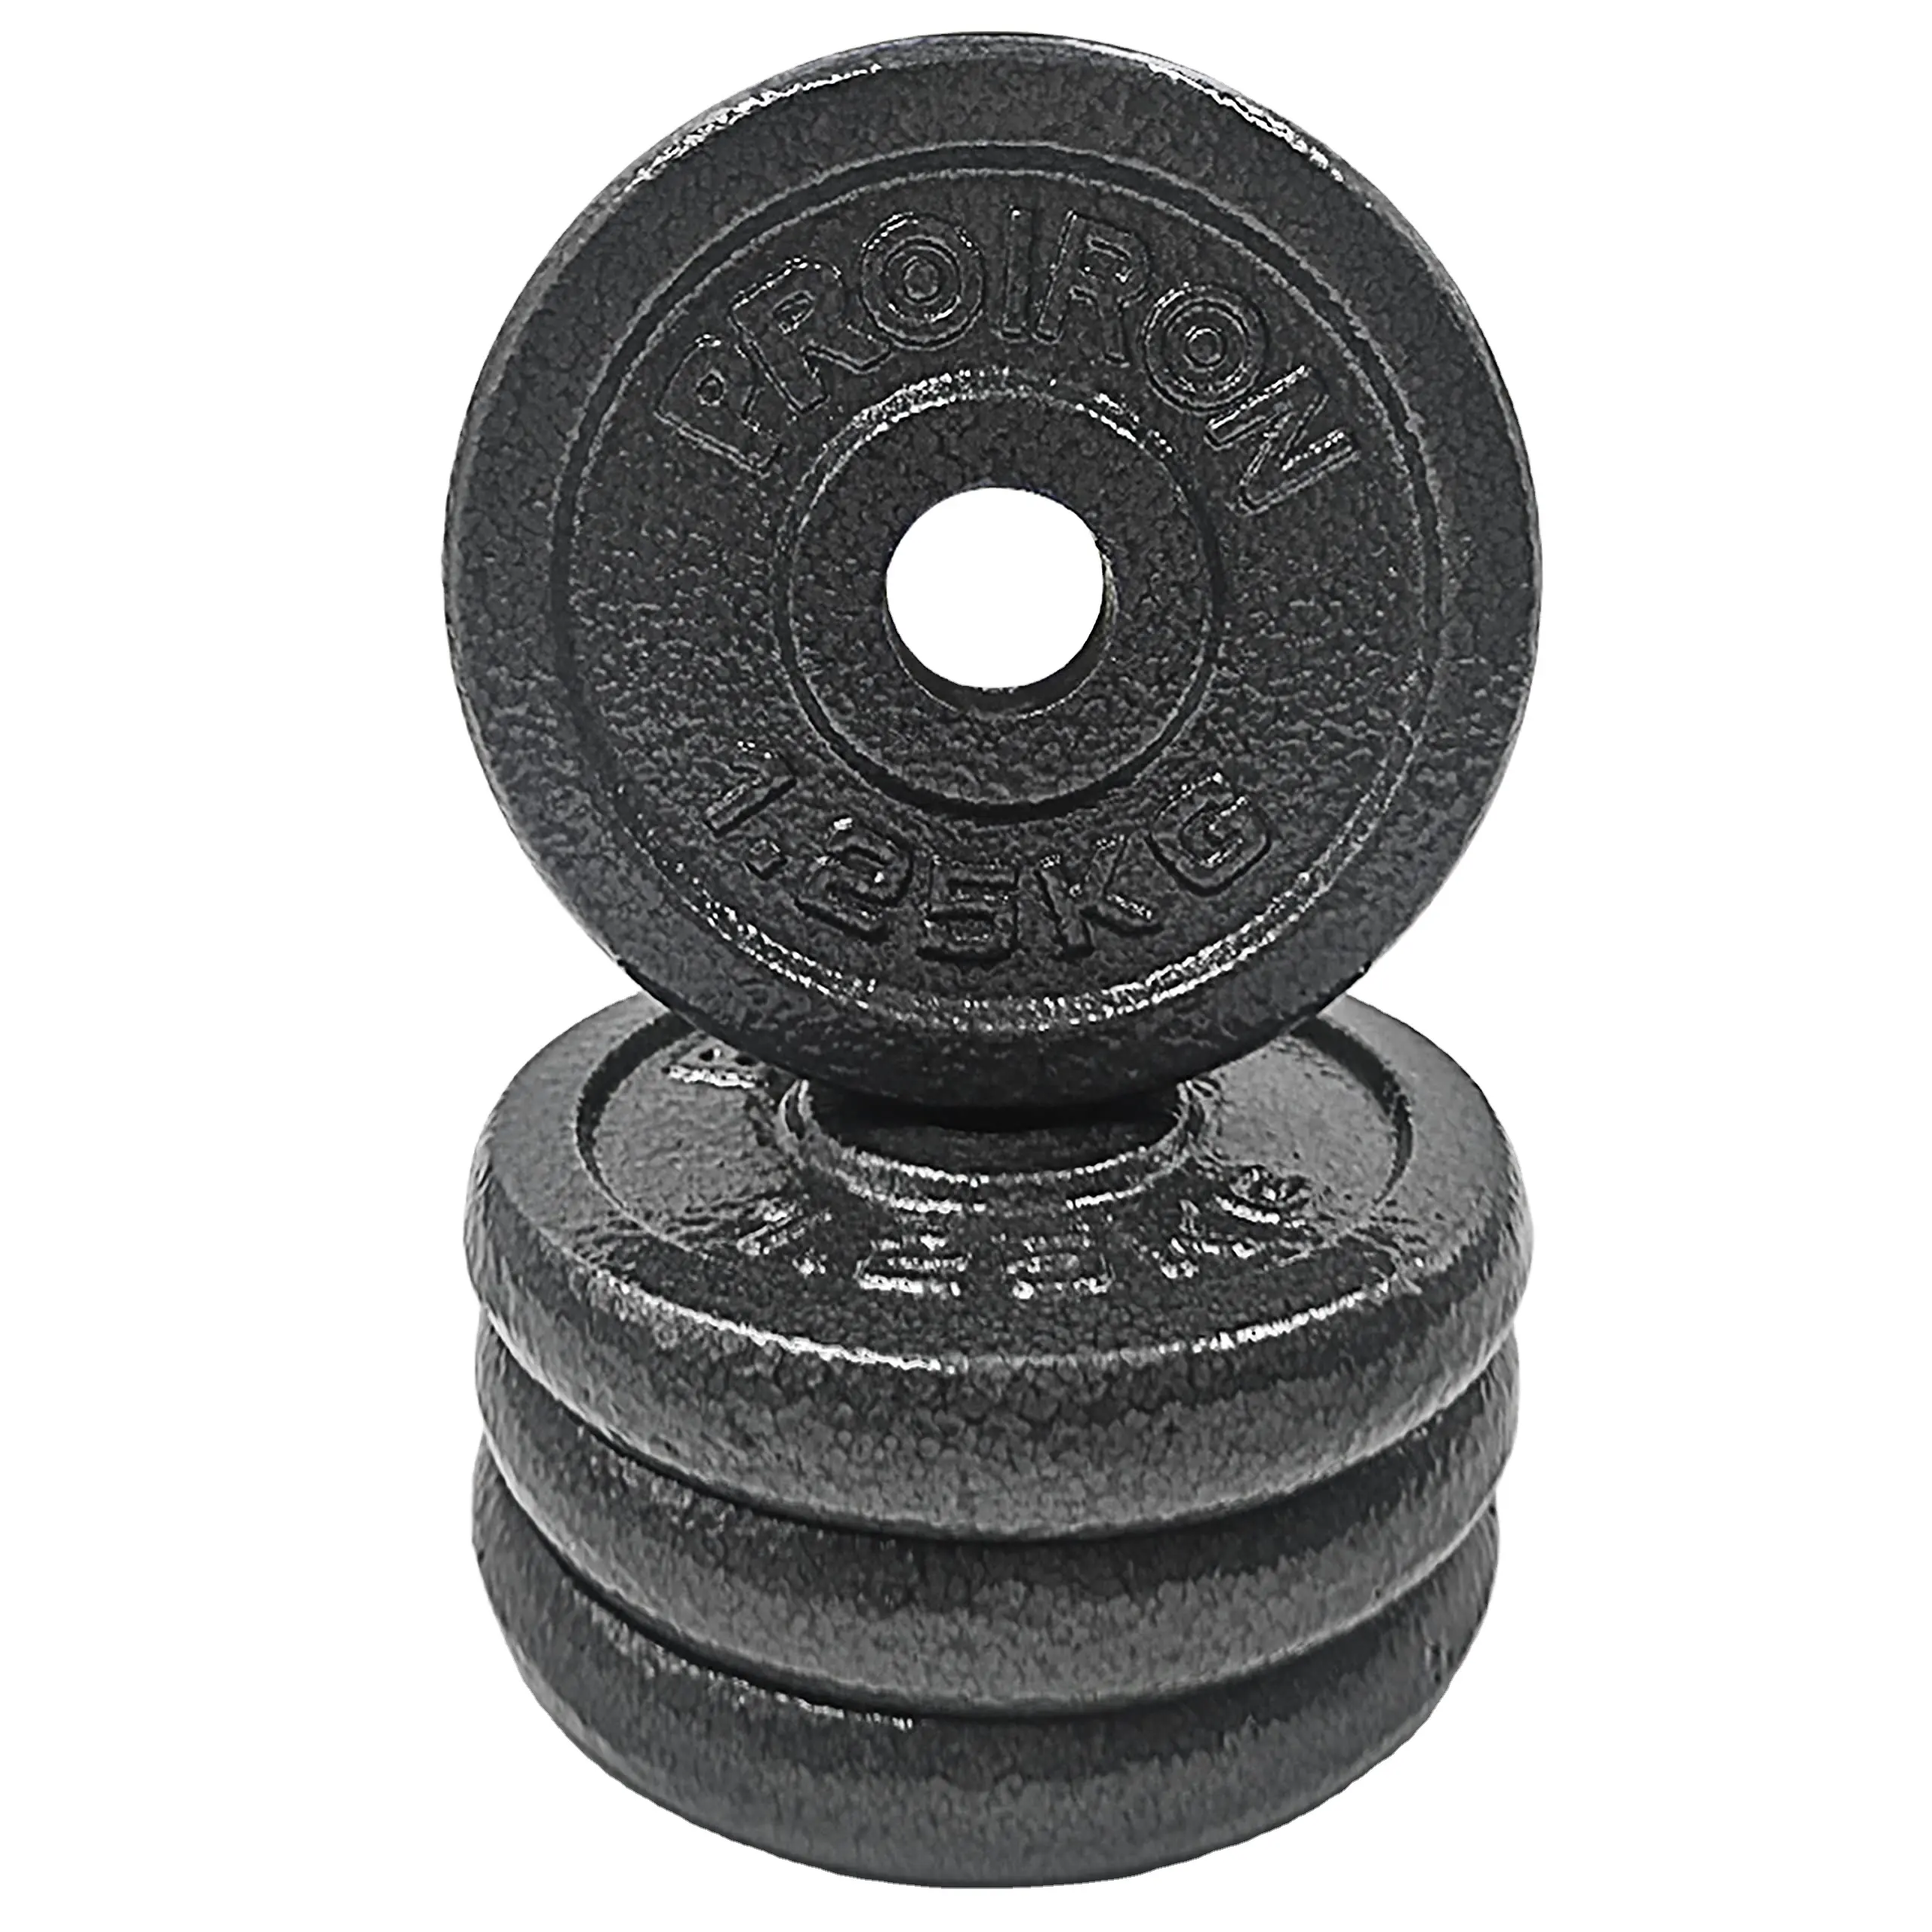 PROIRON-disco de hierro fundido de 1,25 kg, placa de peso de 1 '', placas de peso con agujero, agente de fábrica, equipo de fitness para gimnasio